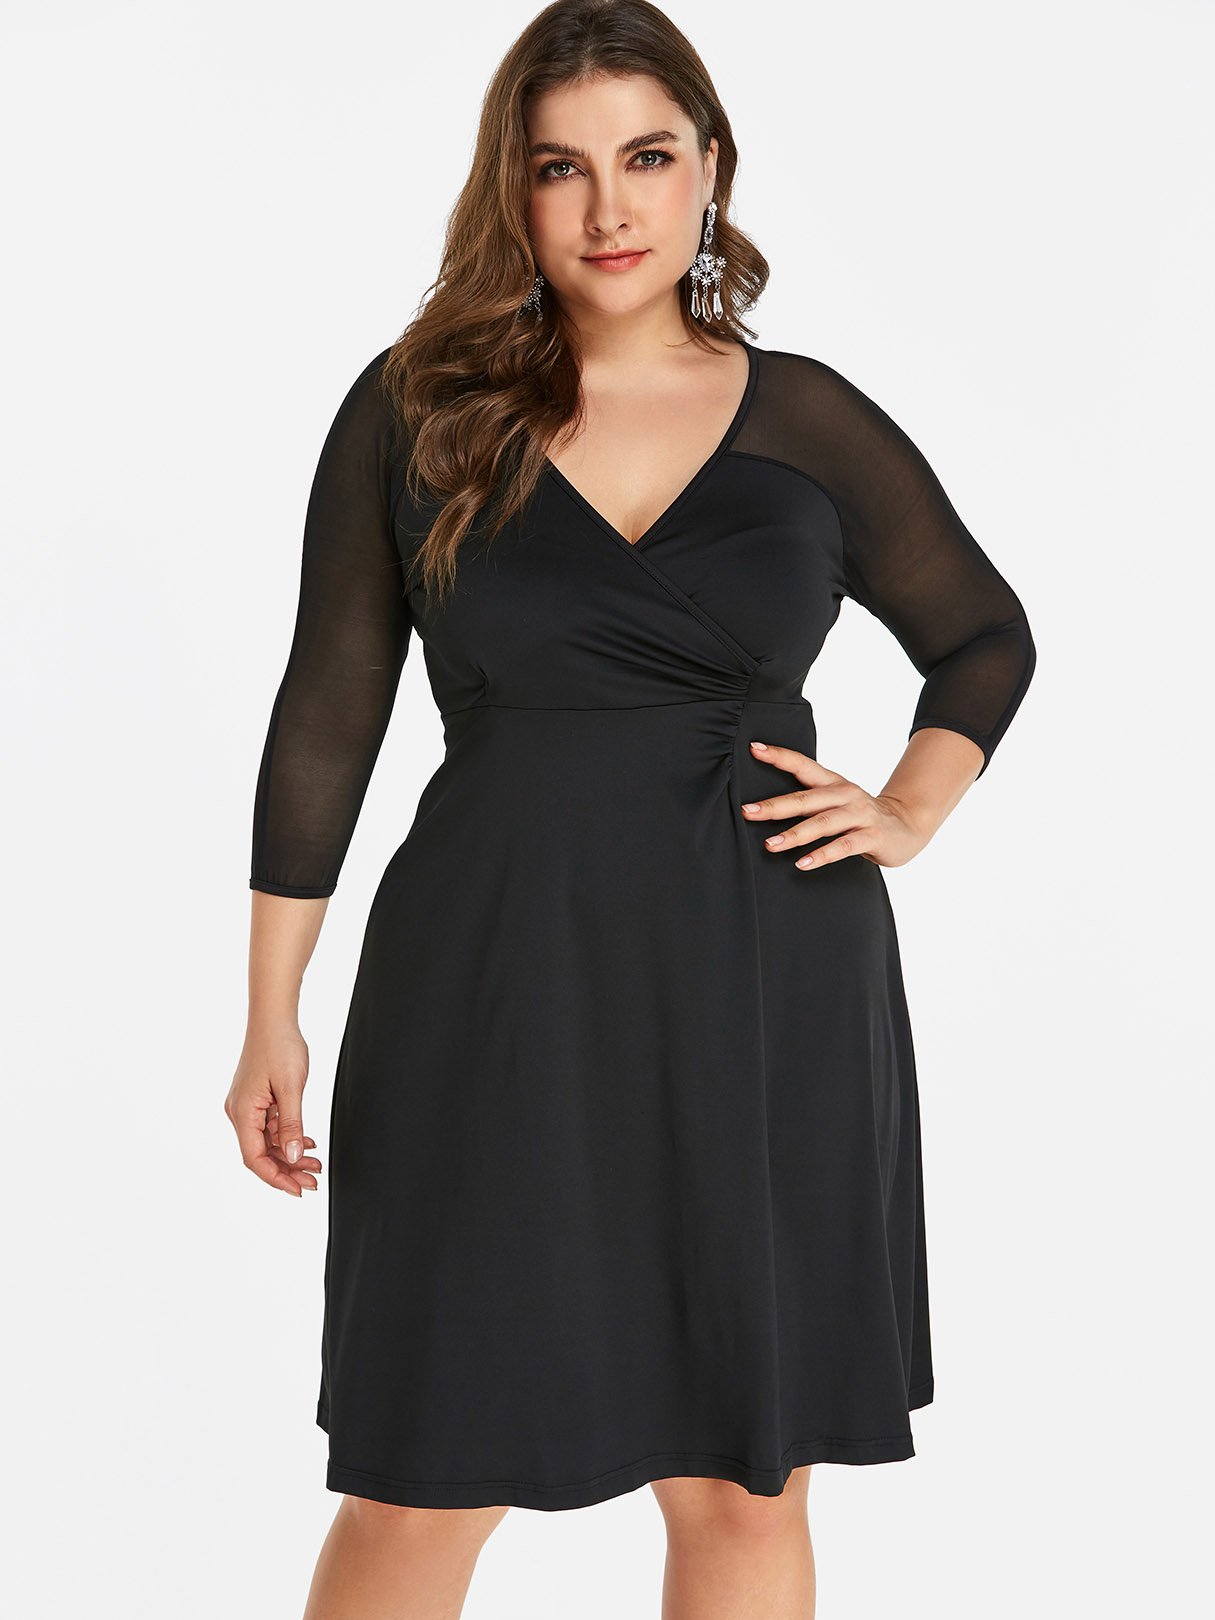 Wholesale V-Neck Plain Wrap 3/4 Sleeve Black Plus Size Dress